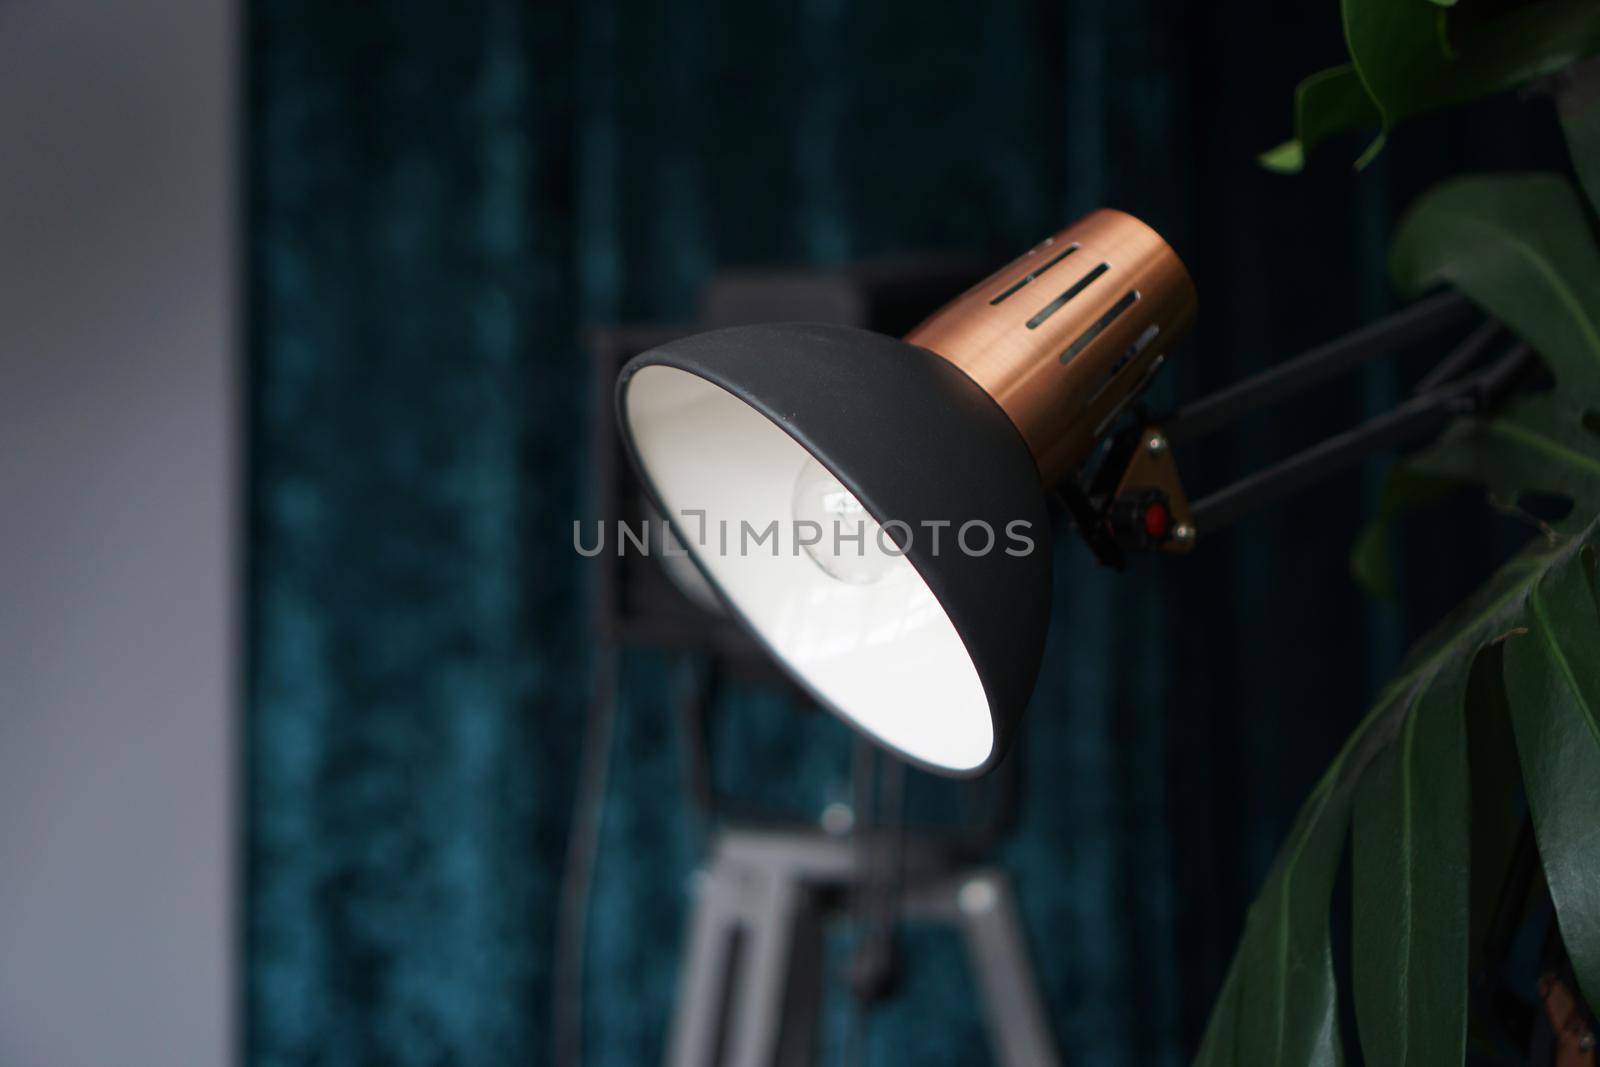 Photo studio lighting equipment on black and blue background indoor